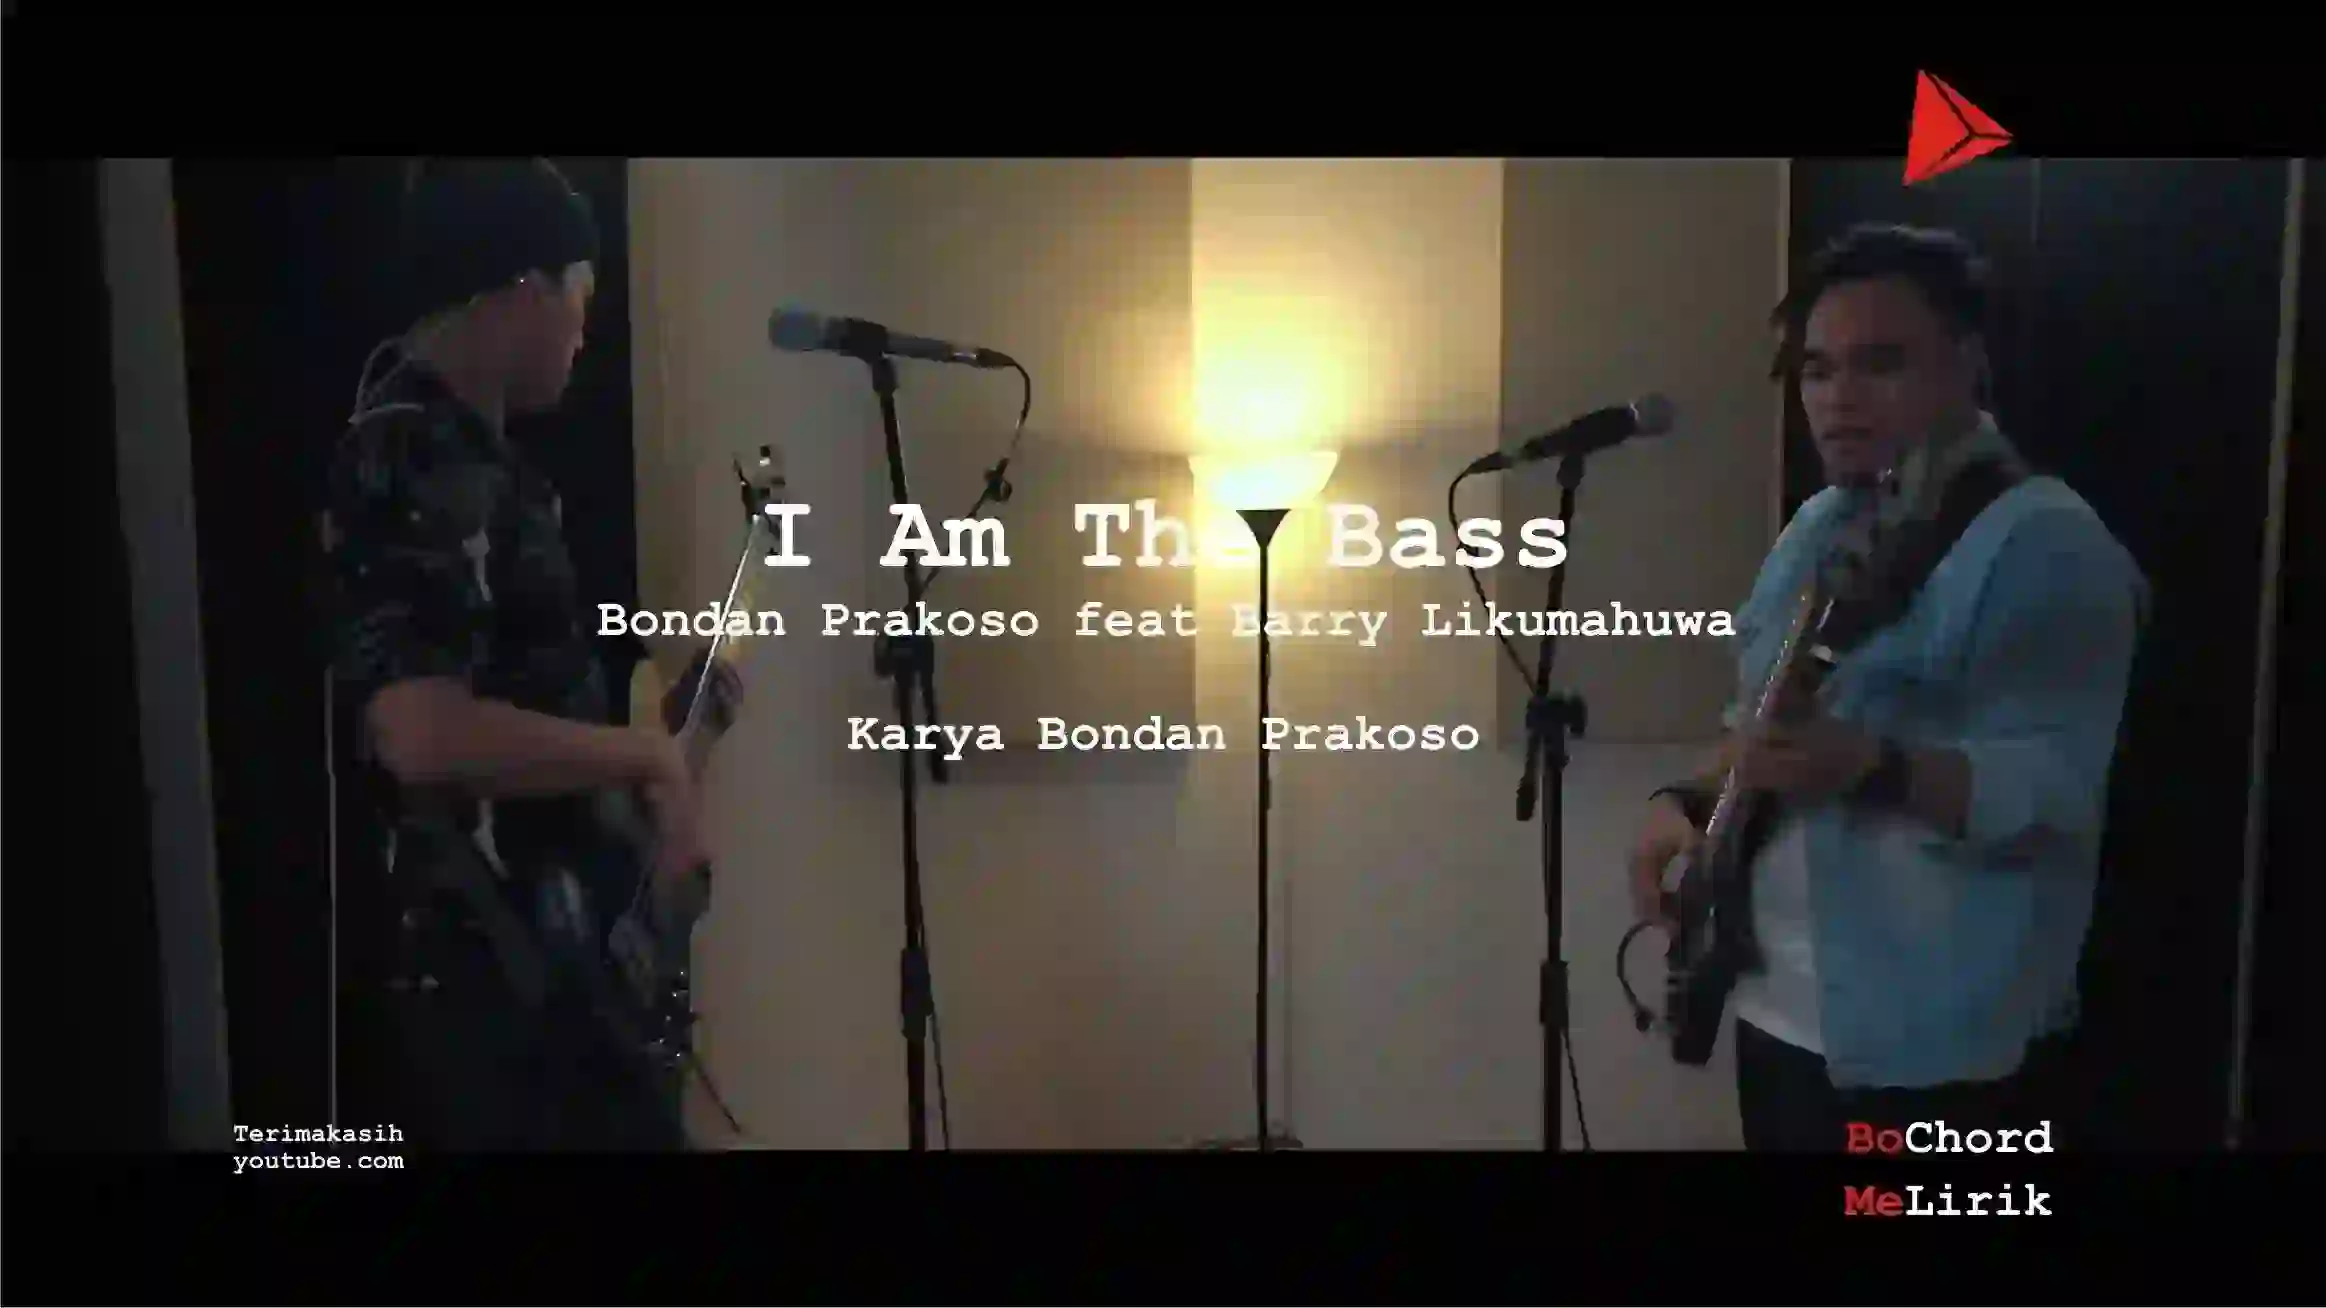 Bo Chord I Am The Bass | Bondan Prakoso feat Barry Likumahuwa (D)